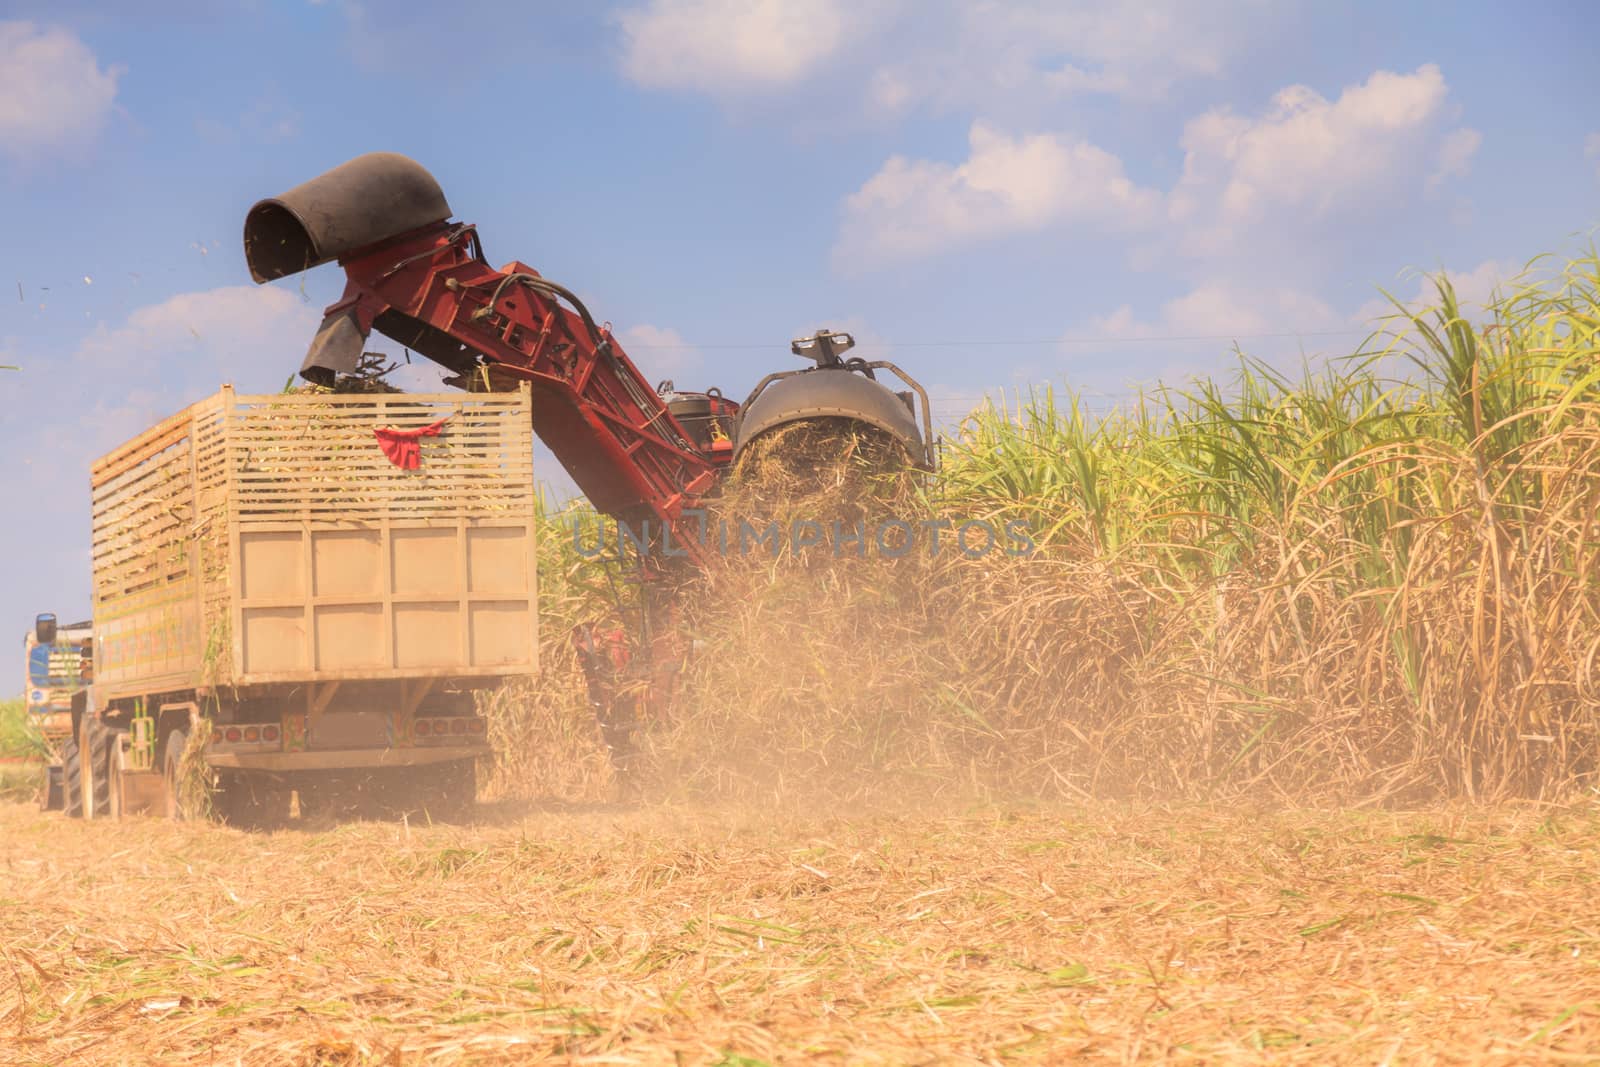 Sugarcane harvester machine